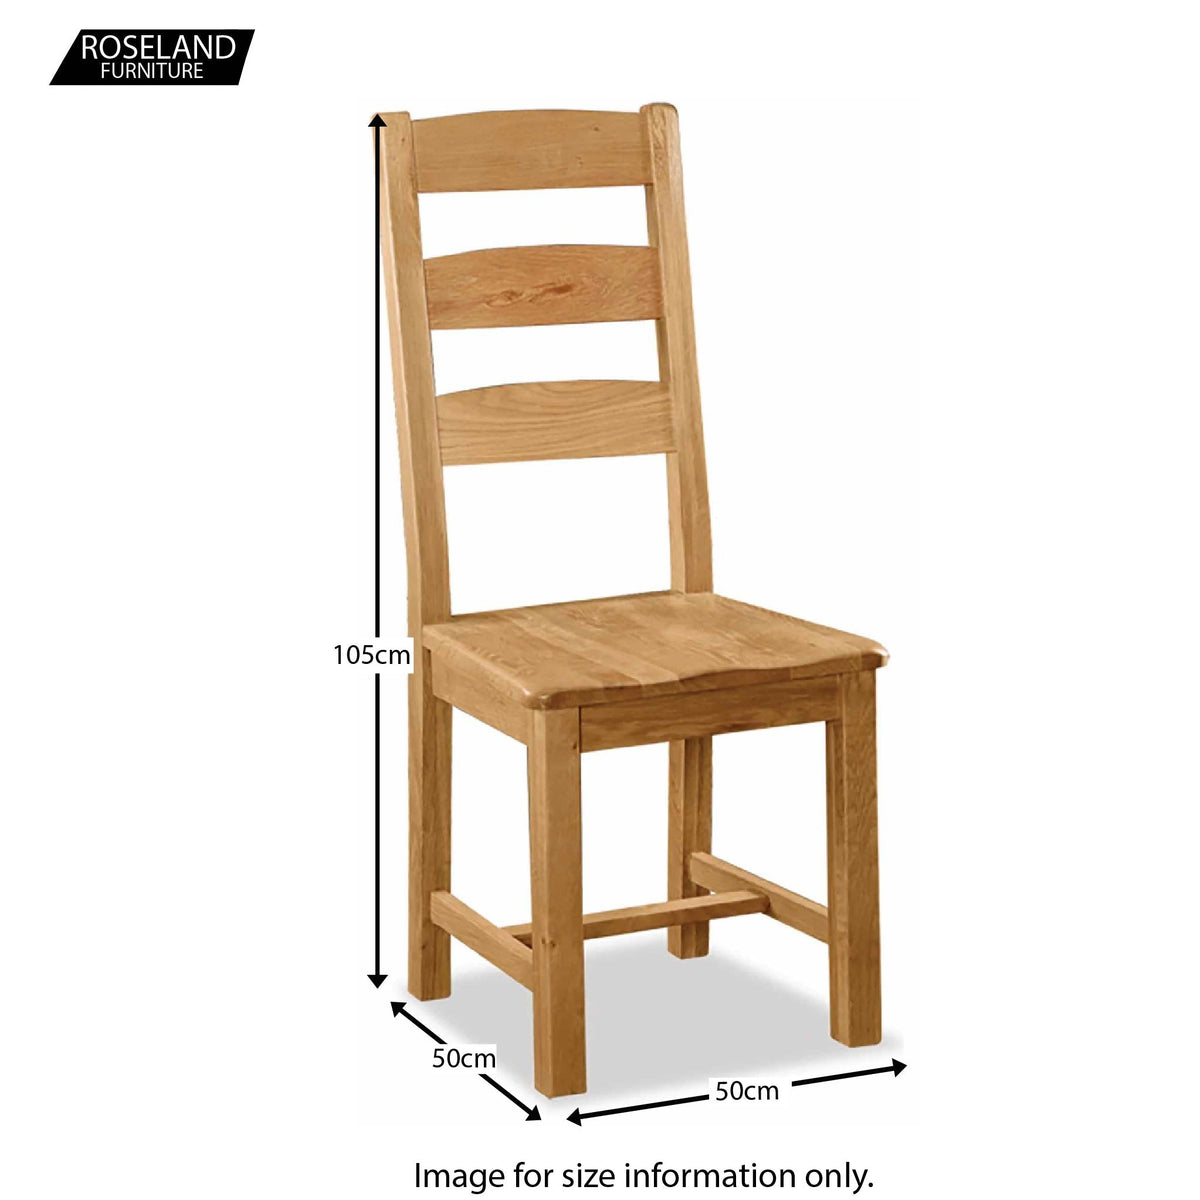 Zelah Oak Slatted Back Dining Chair - Size Guide